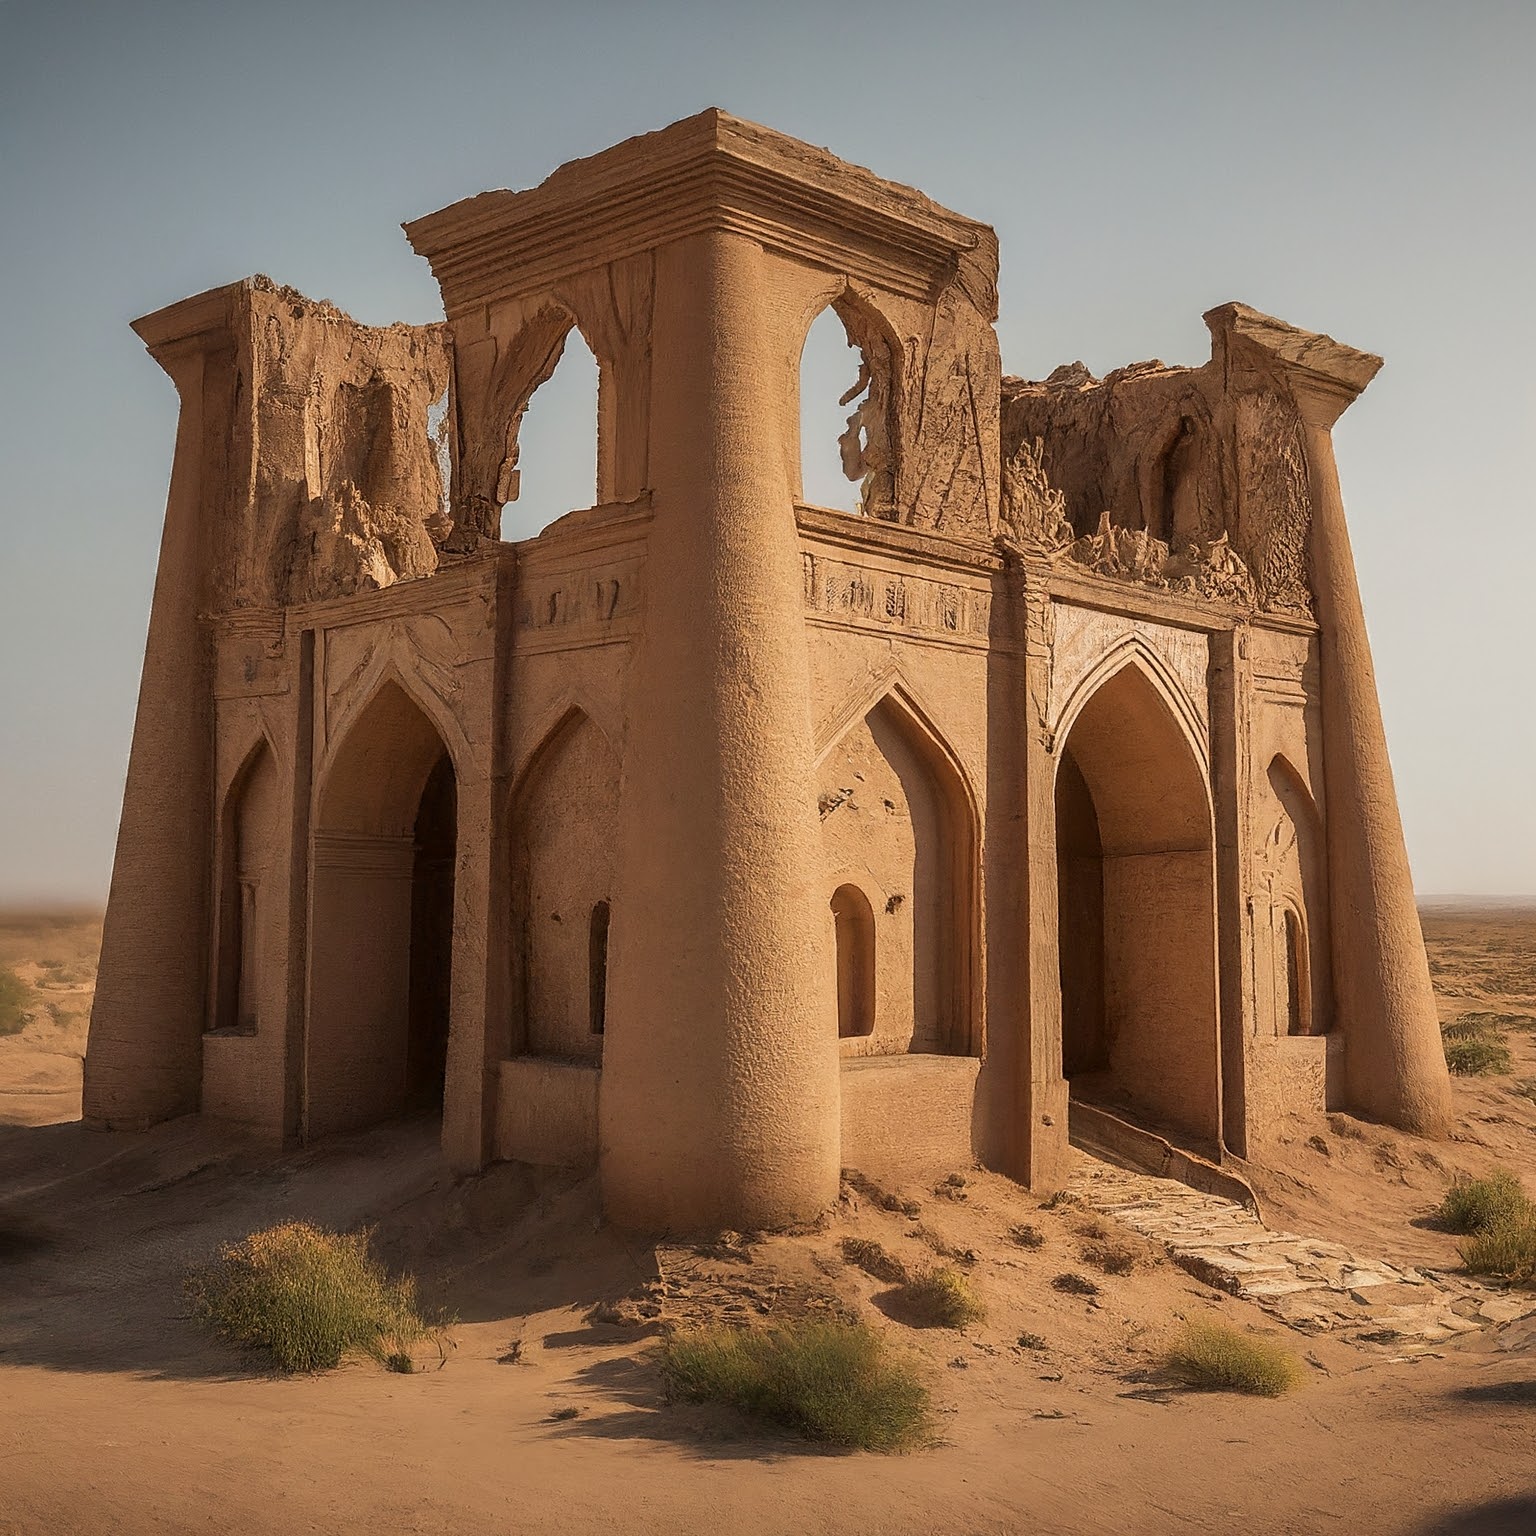 Ancient ruins of Dekhistan, Turkmenistan, bathed in warm desert sunlight.